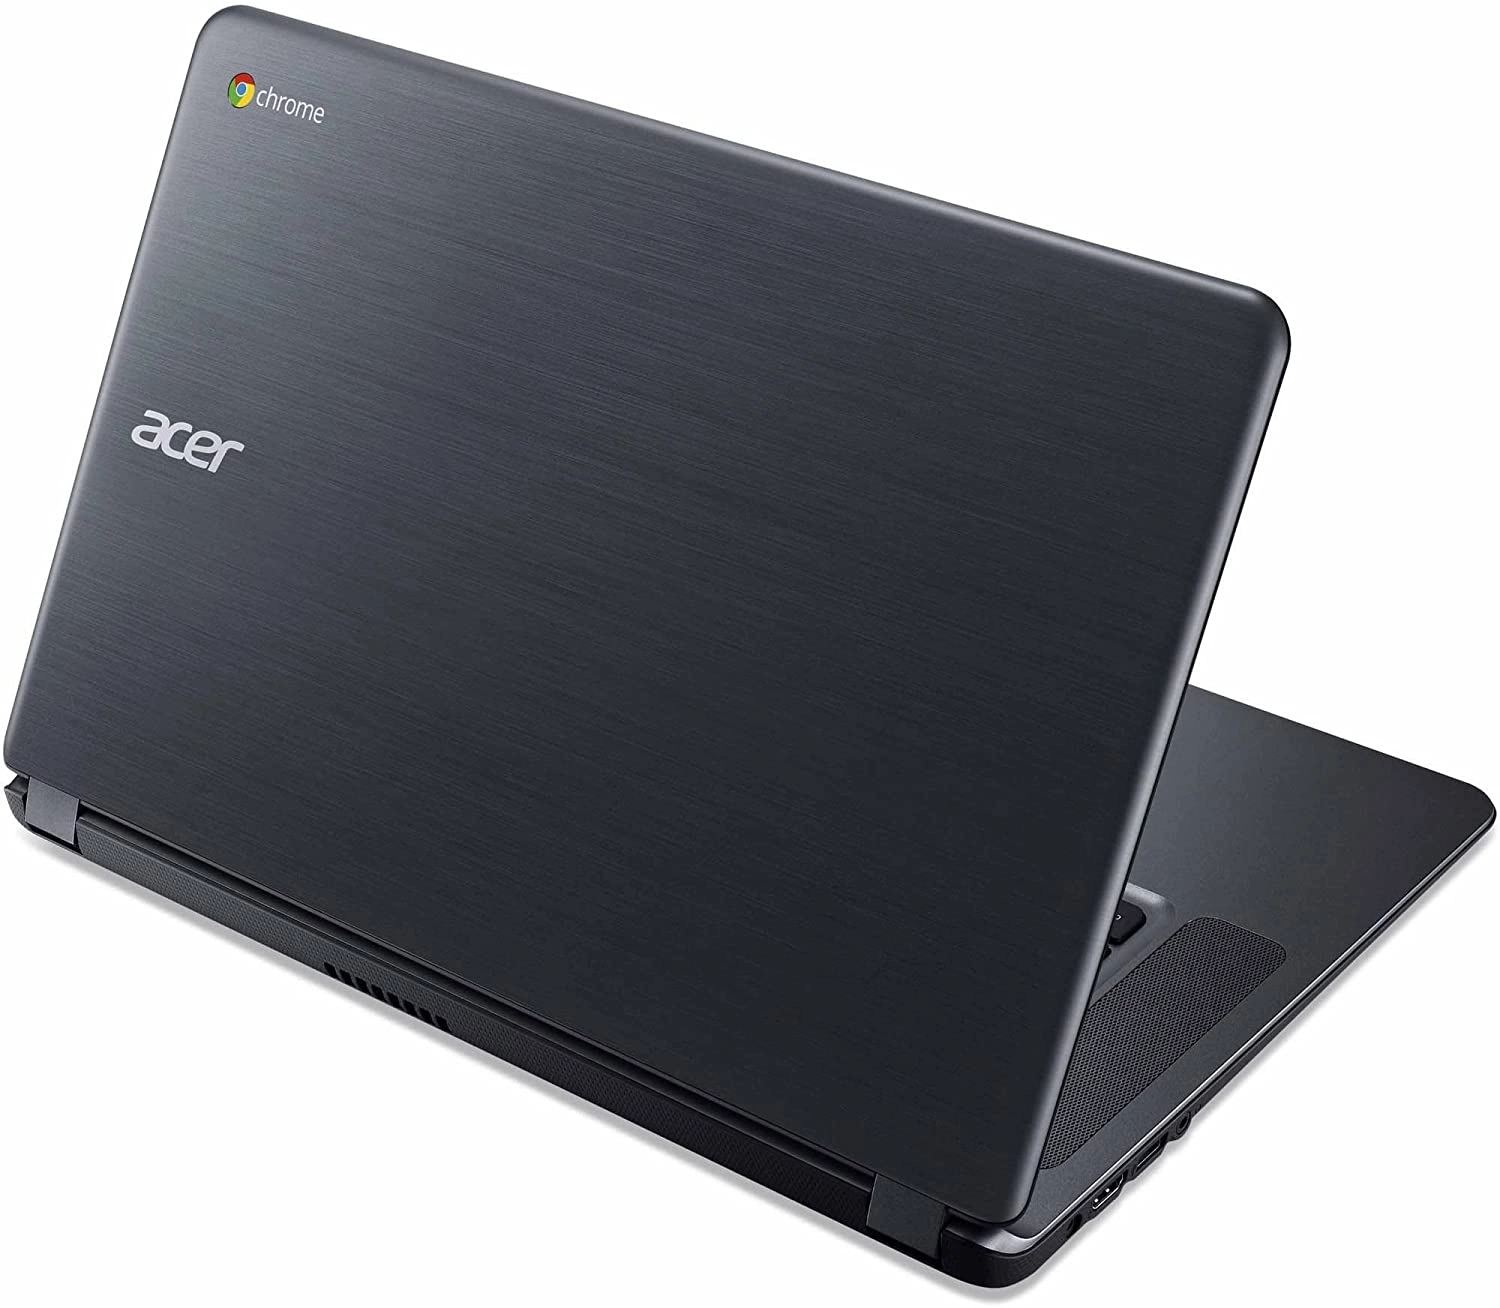 Acer CB5-532 laptop image